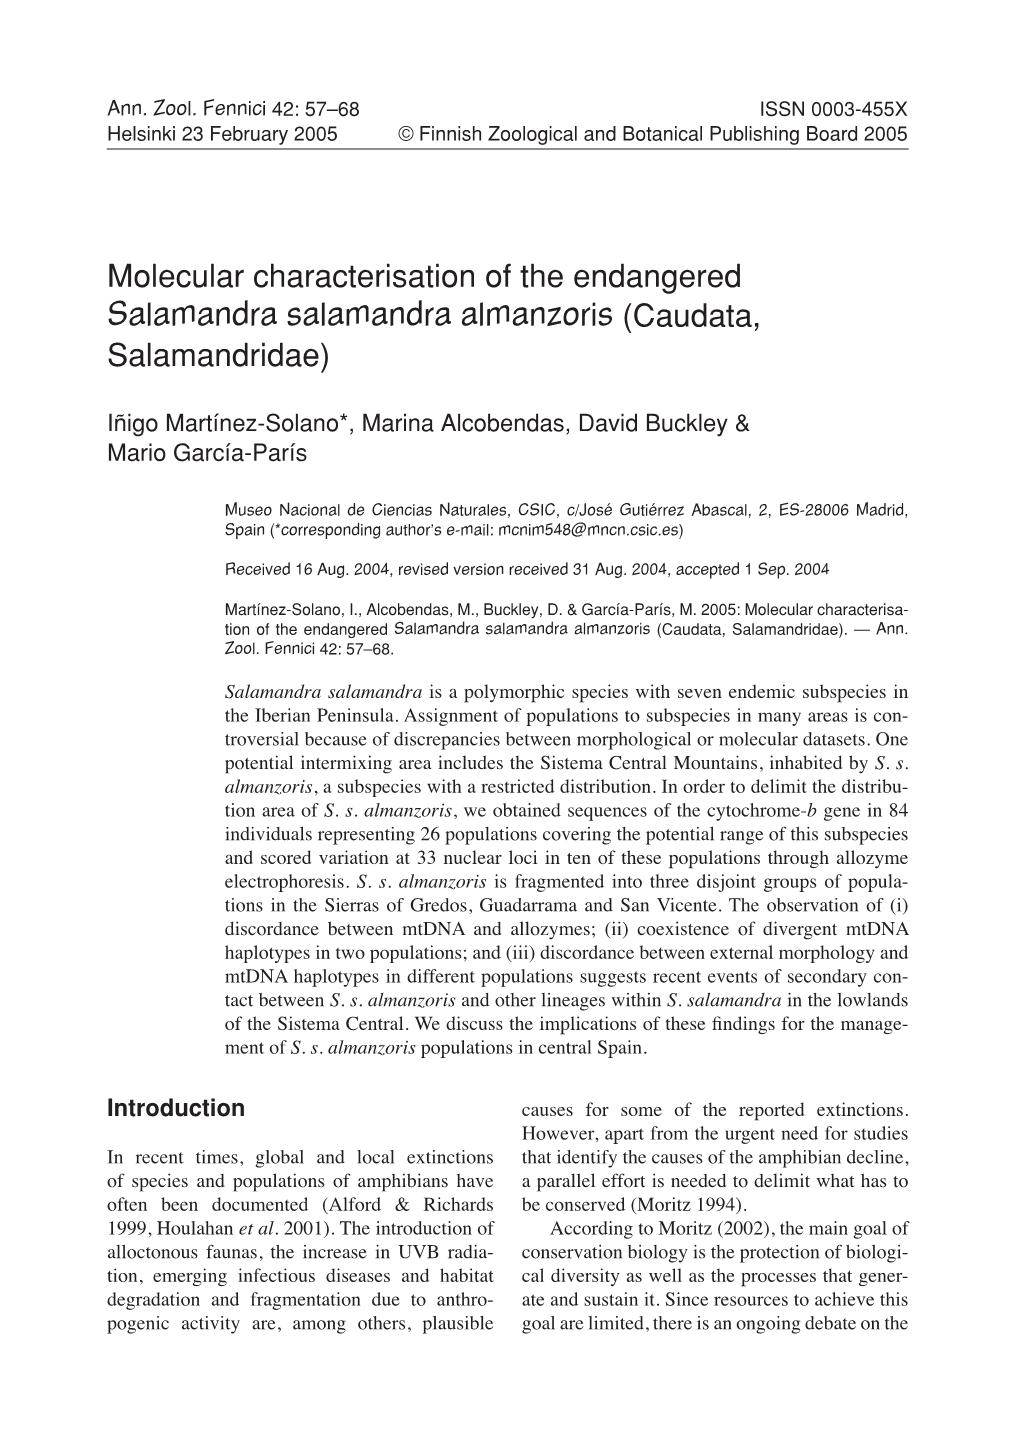 Molecular Characterisation of the Endangered Salamandra Salamandra Almanzoris (Caudata, Salamandridae)